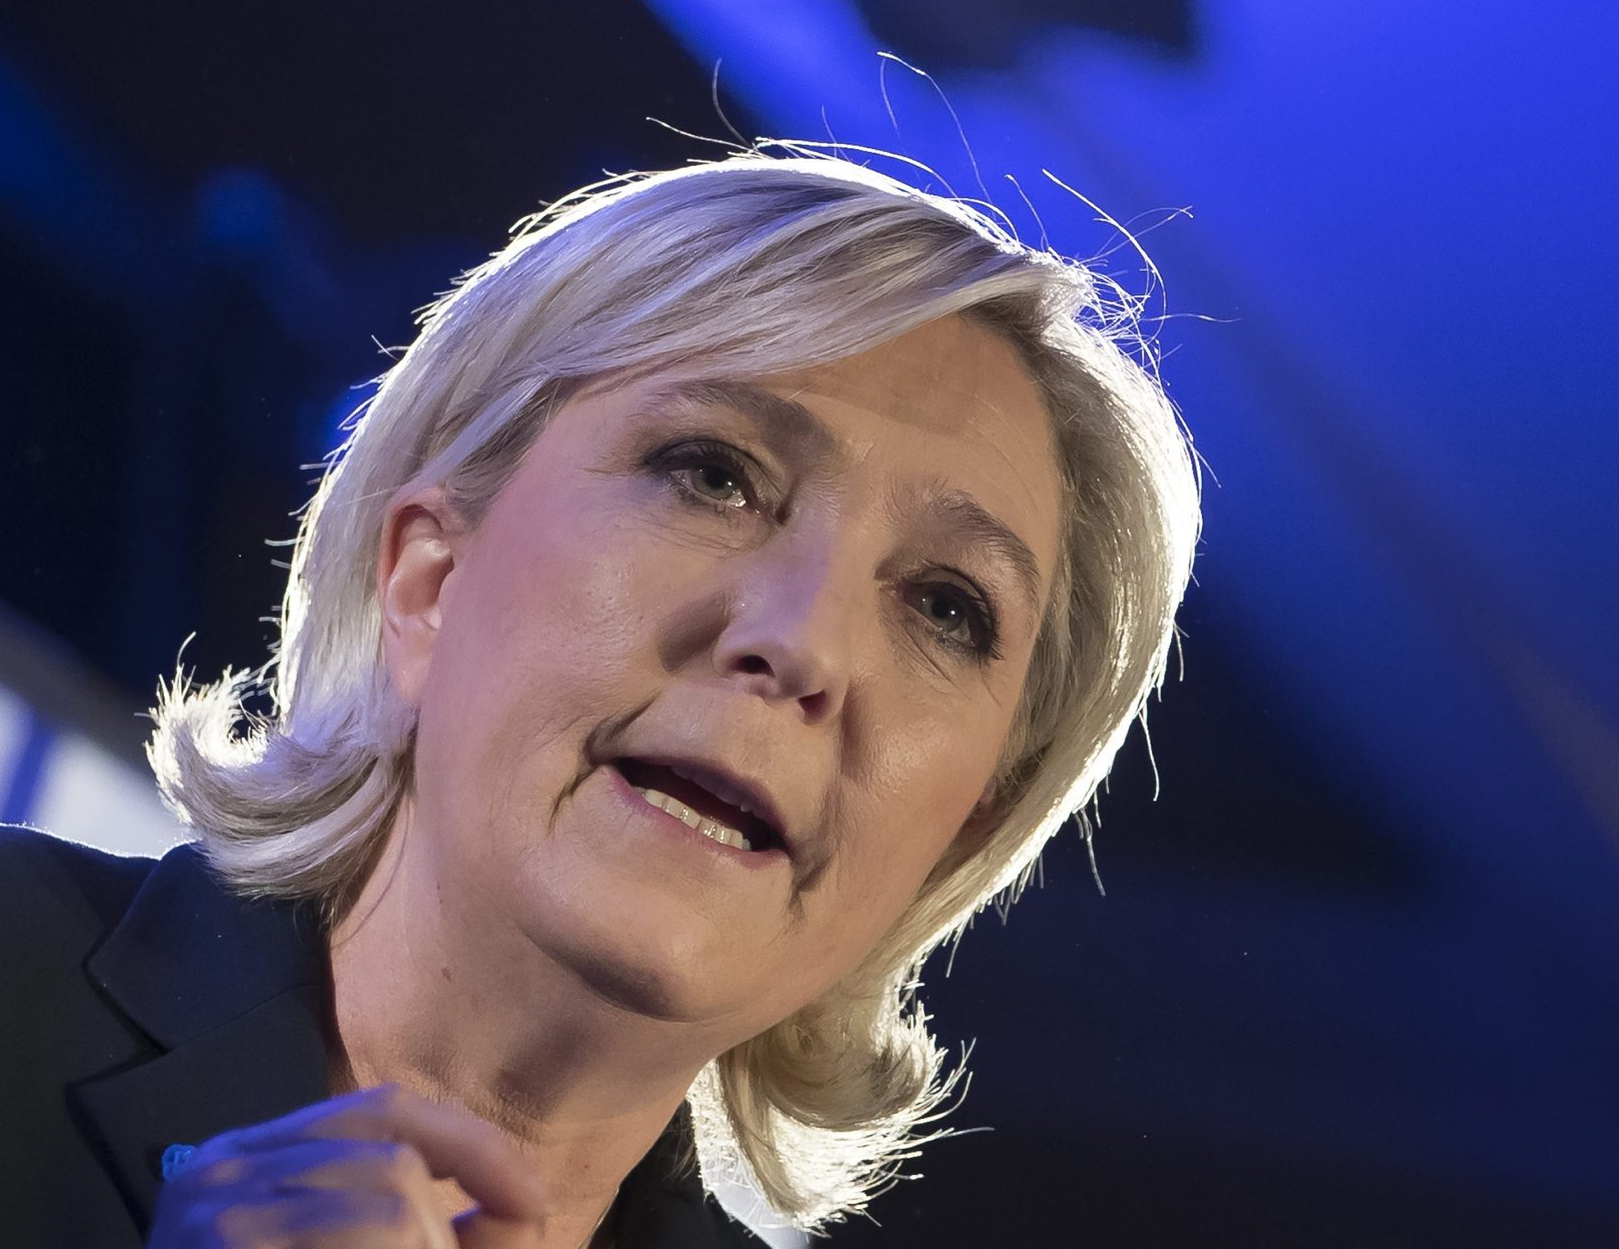 Marine Le Pen, onkostenvergoeding, Front National, Europees Parlement